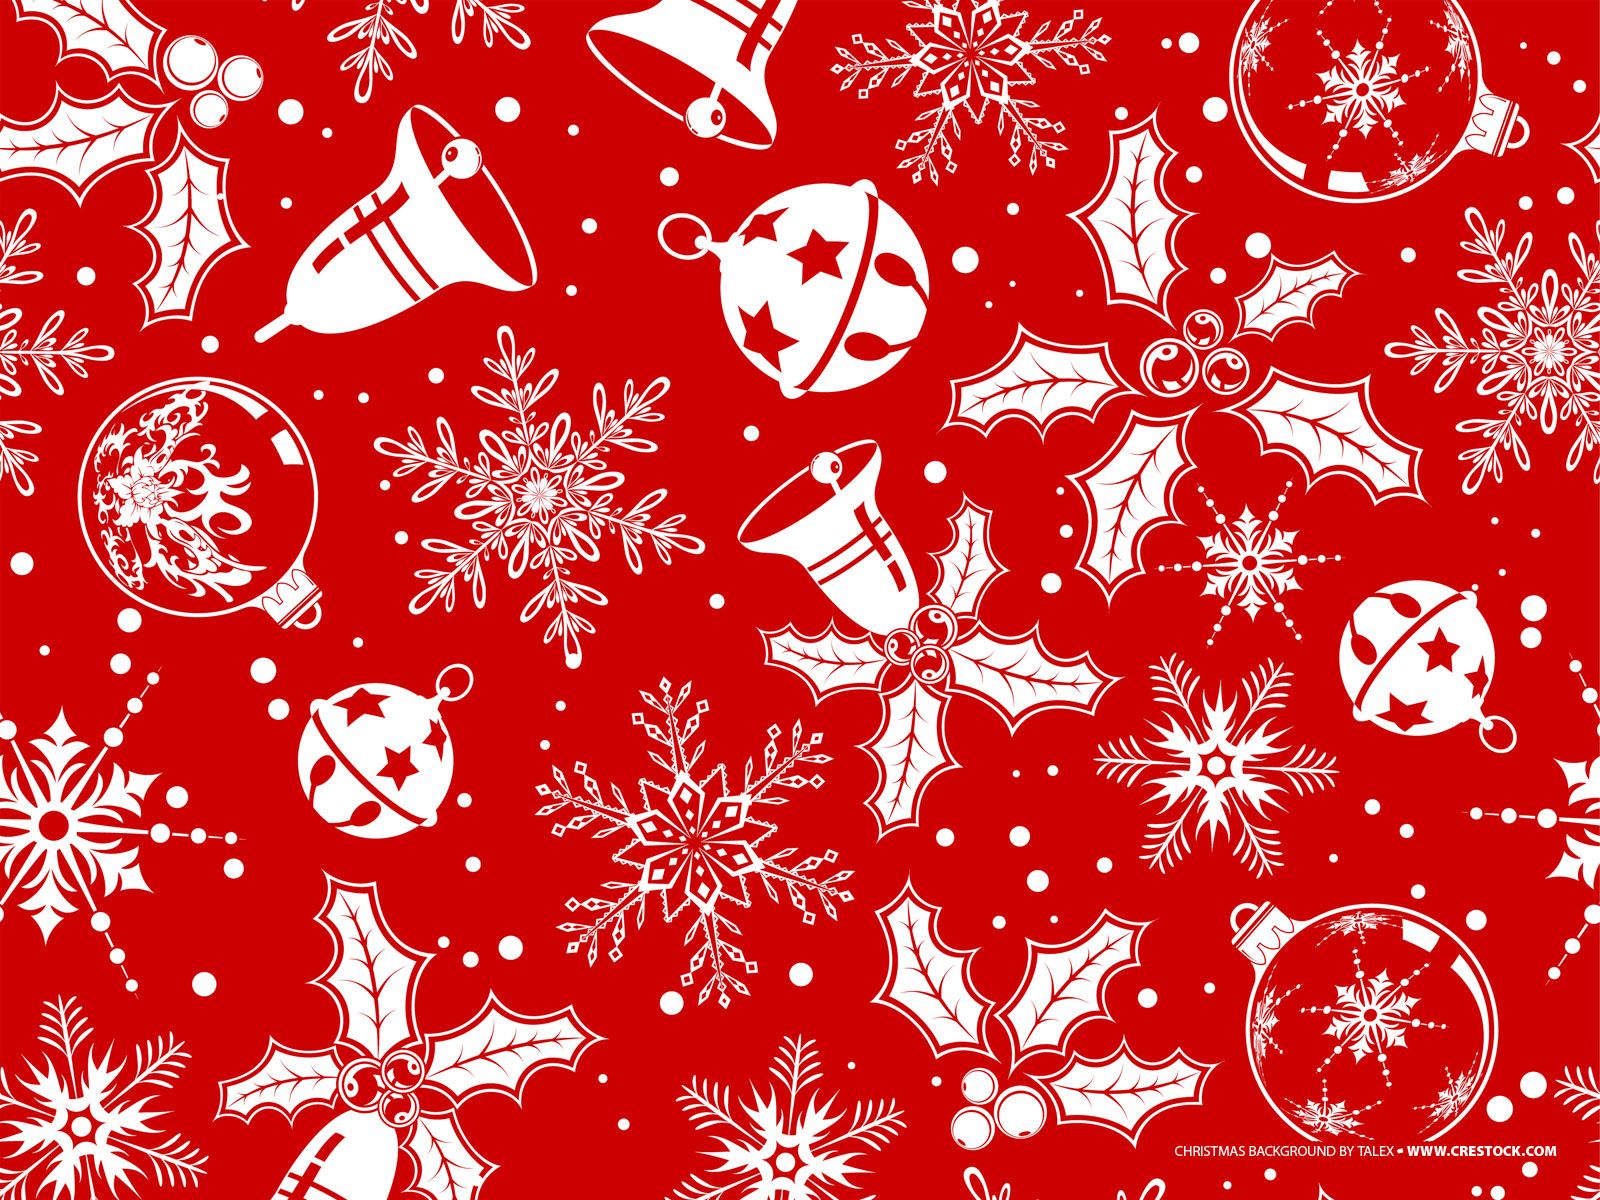 Stunning High Resolution Christmas Wallpaper. Crestock.com Blog